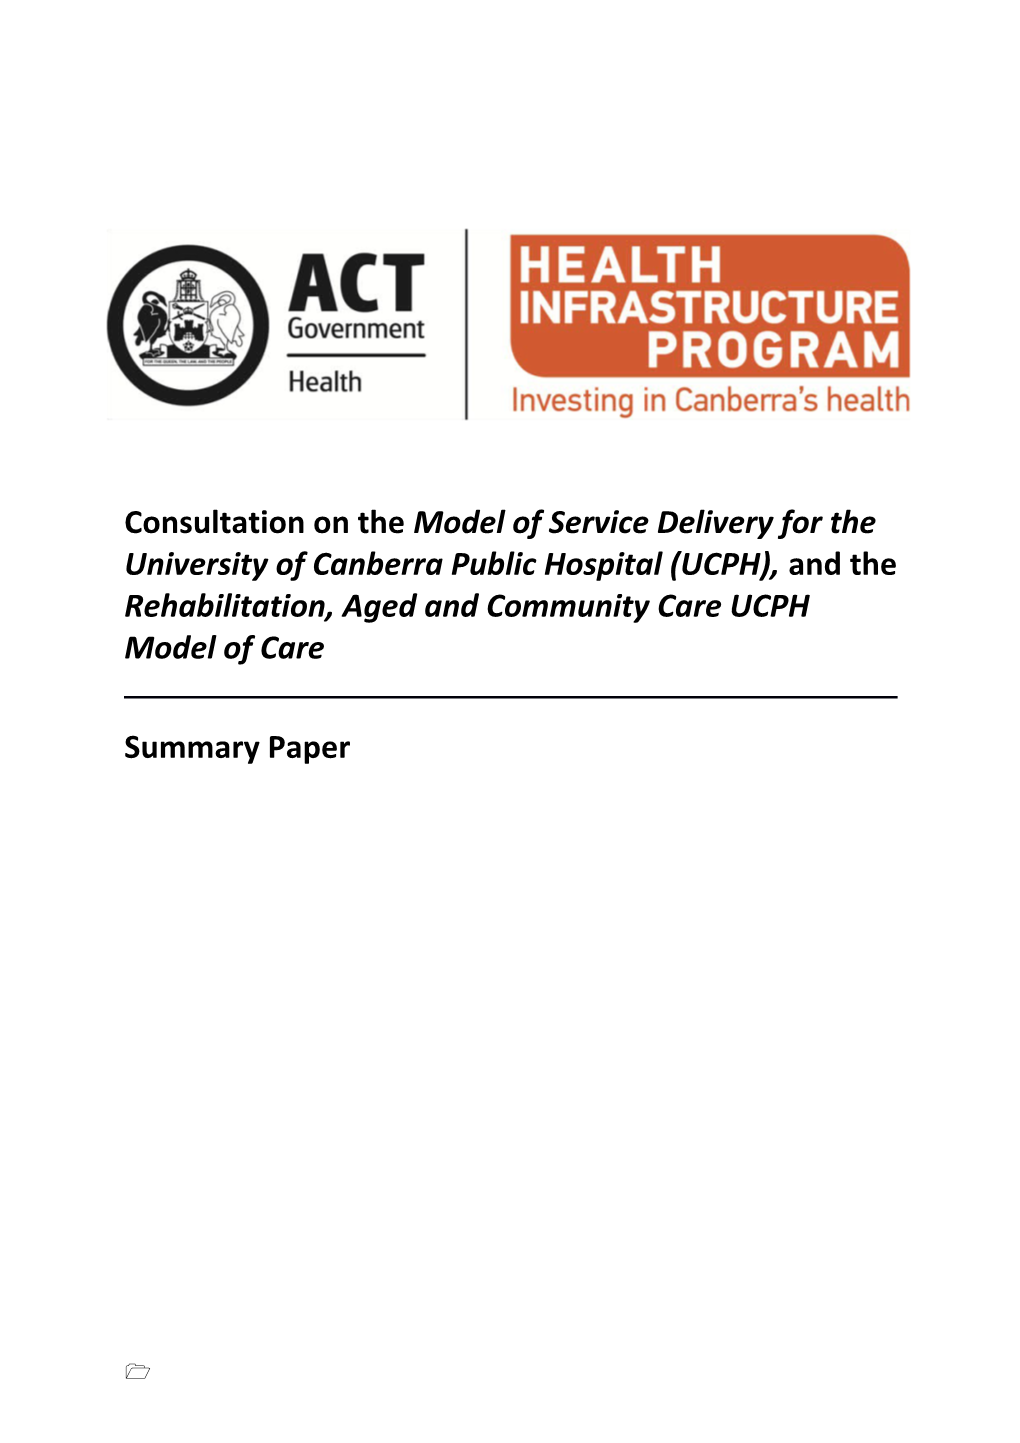 Rehabilitation, Aged and Community Careucph Model of Care